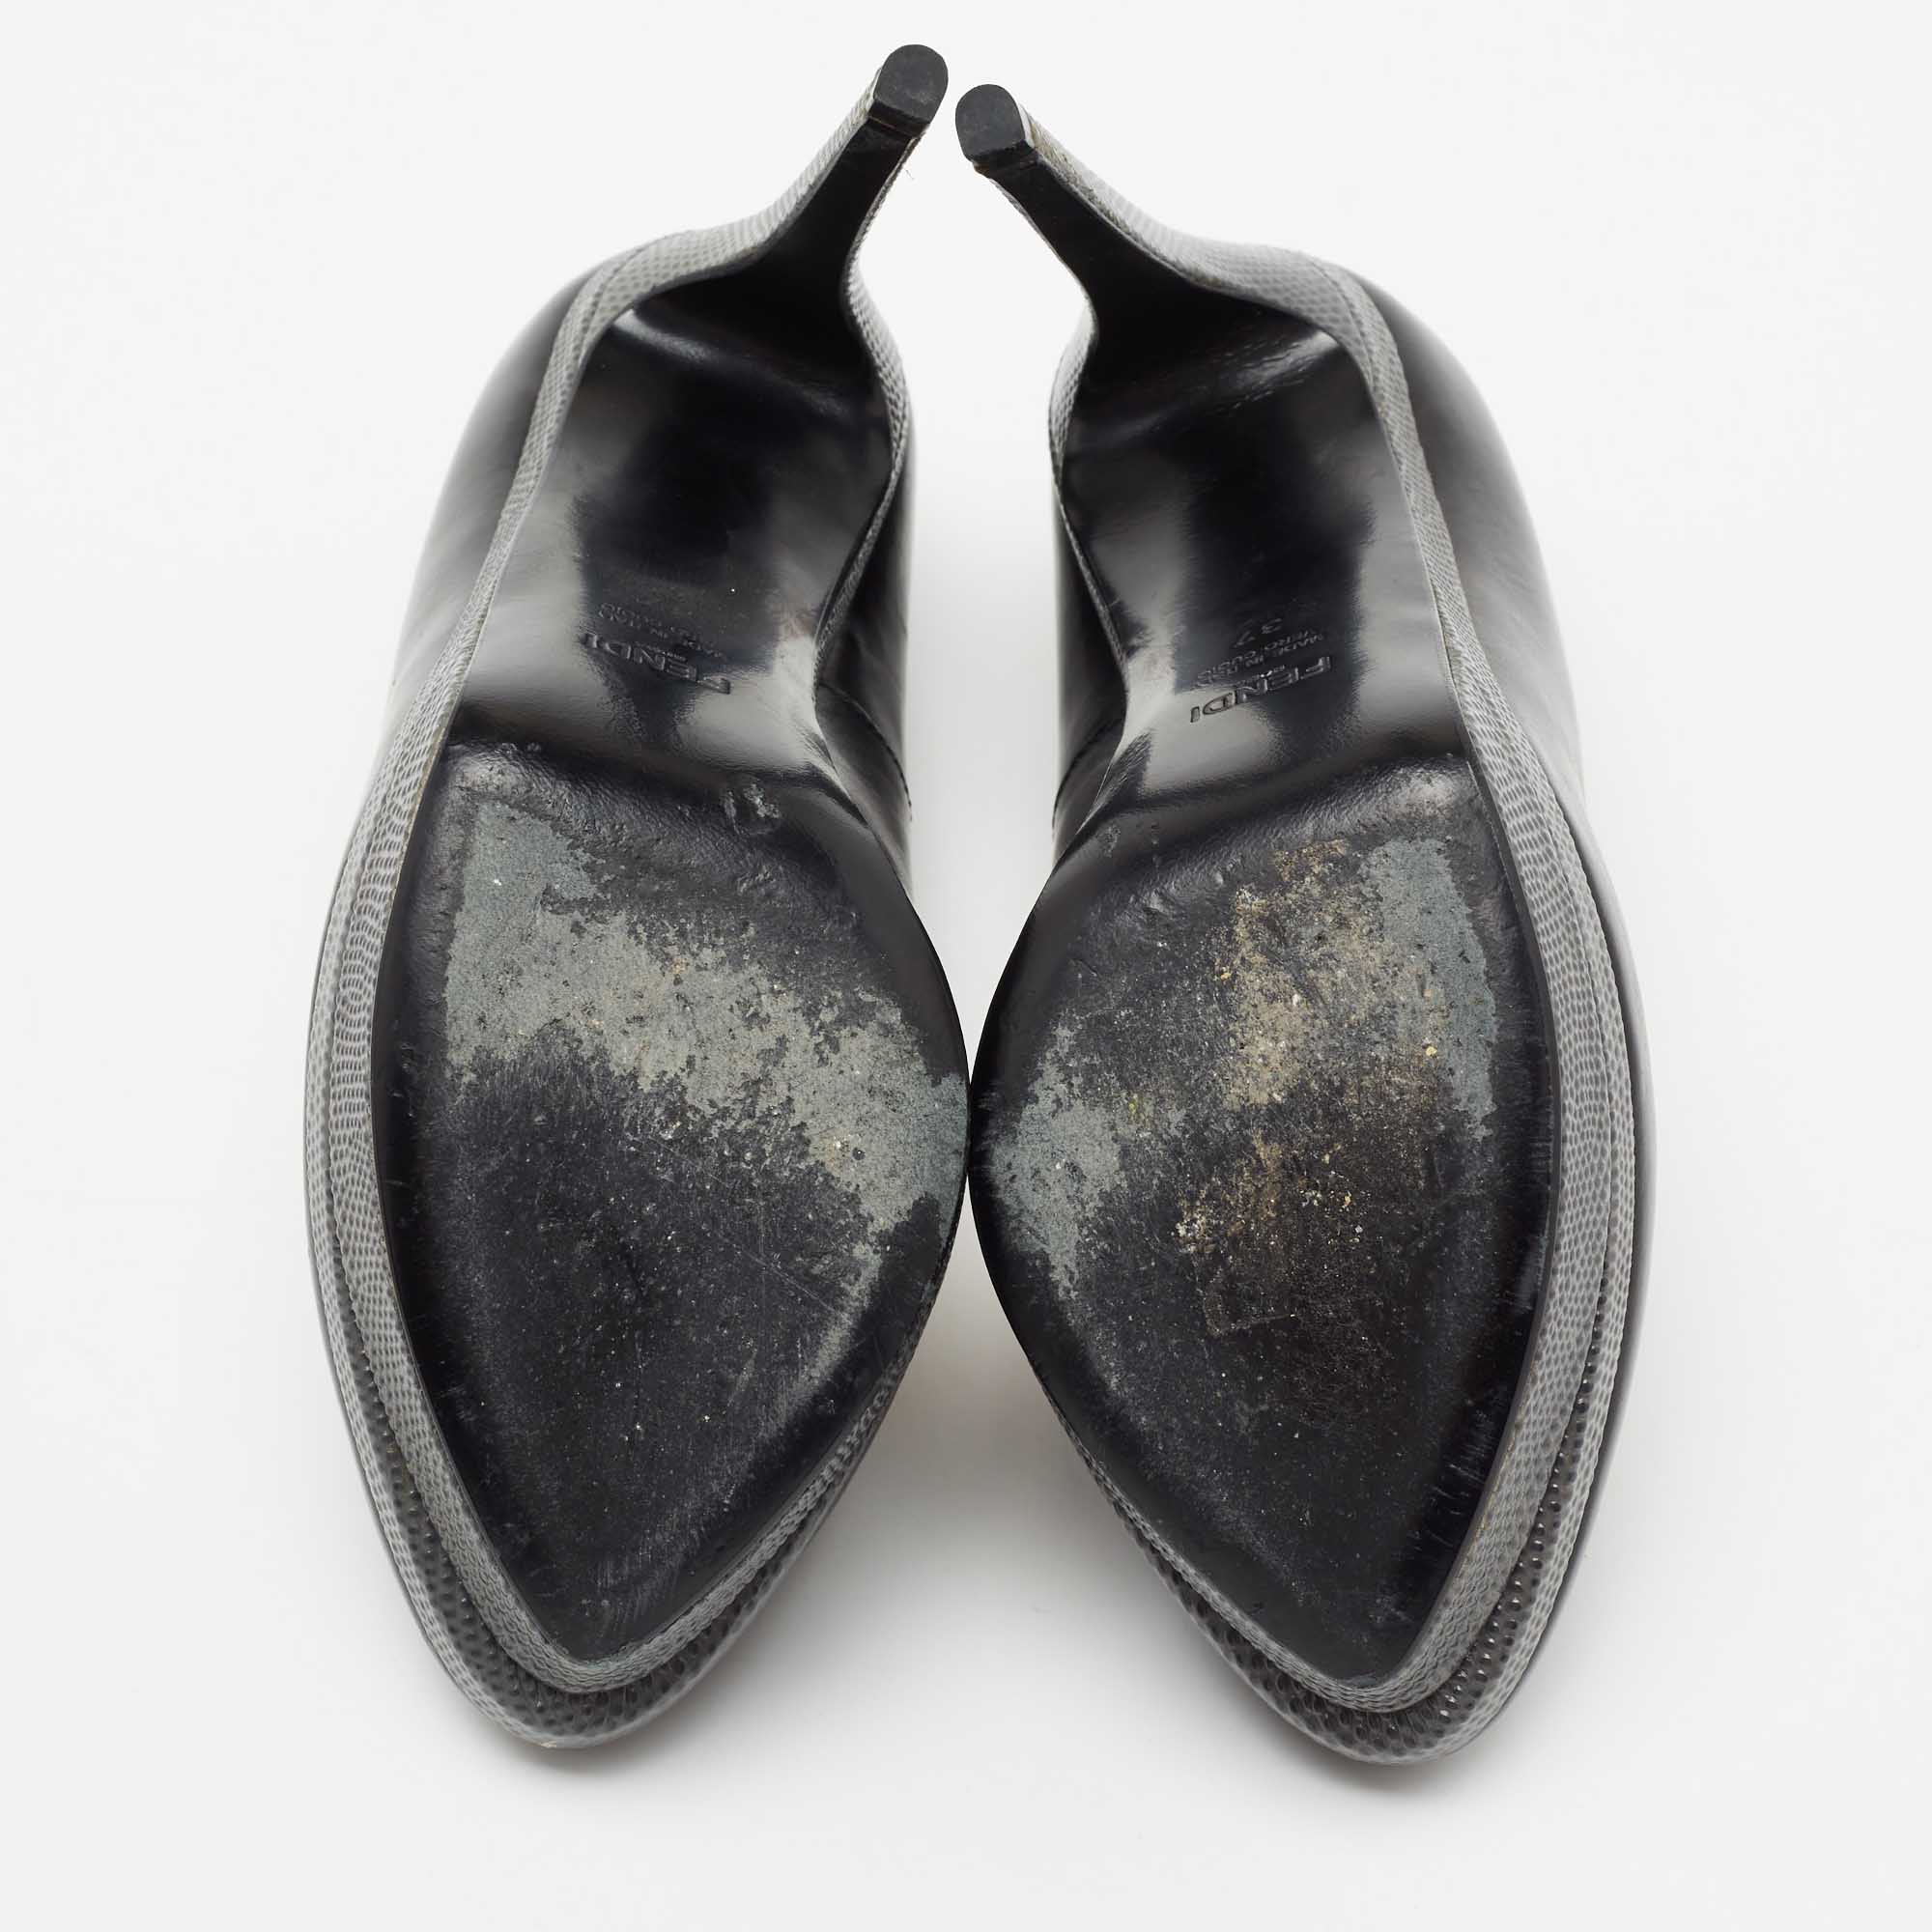 Fendi Black/Grey Leather And Lizard Embossed Heel Platform Pumps Size 37